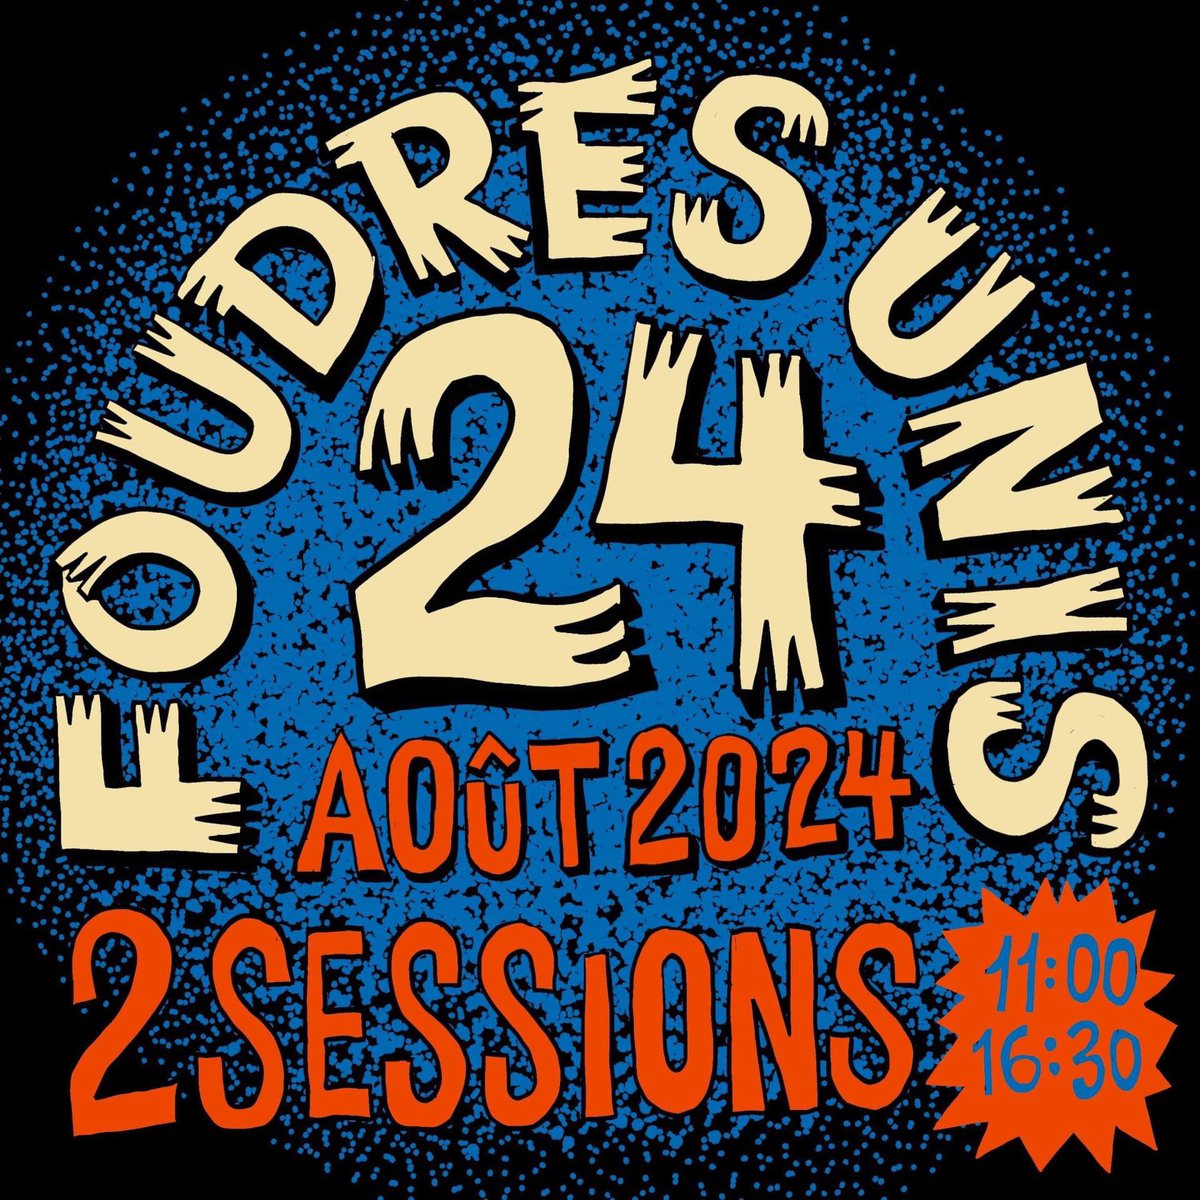 Foudres Unis 2024 est enfin de retour!
Foudres Unis is finally back!

#Foudresunis #FU2024